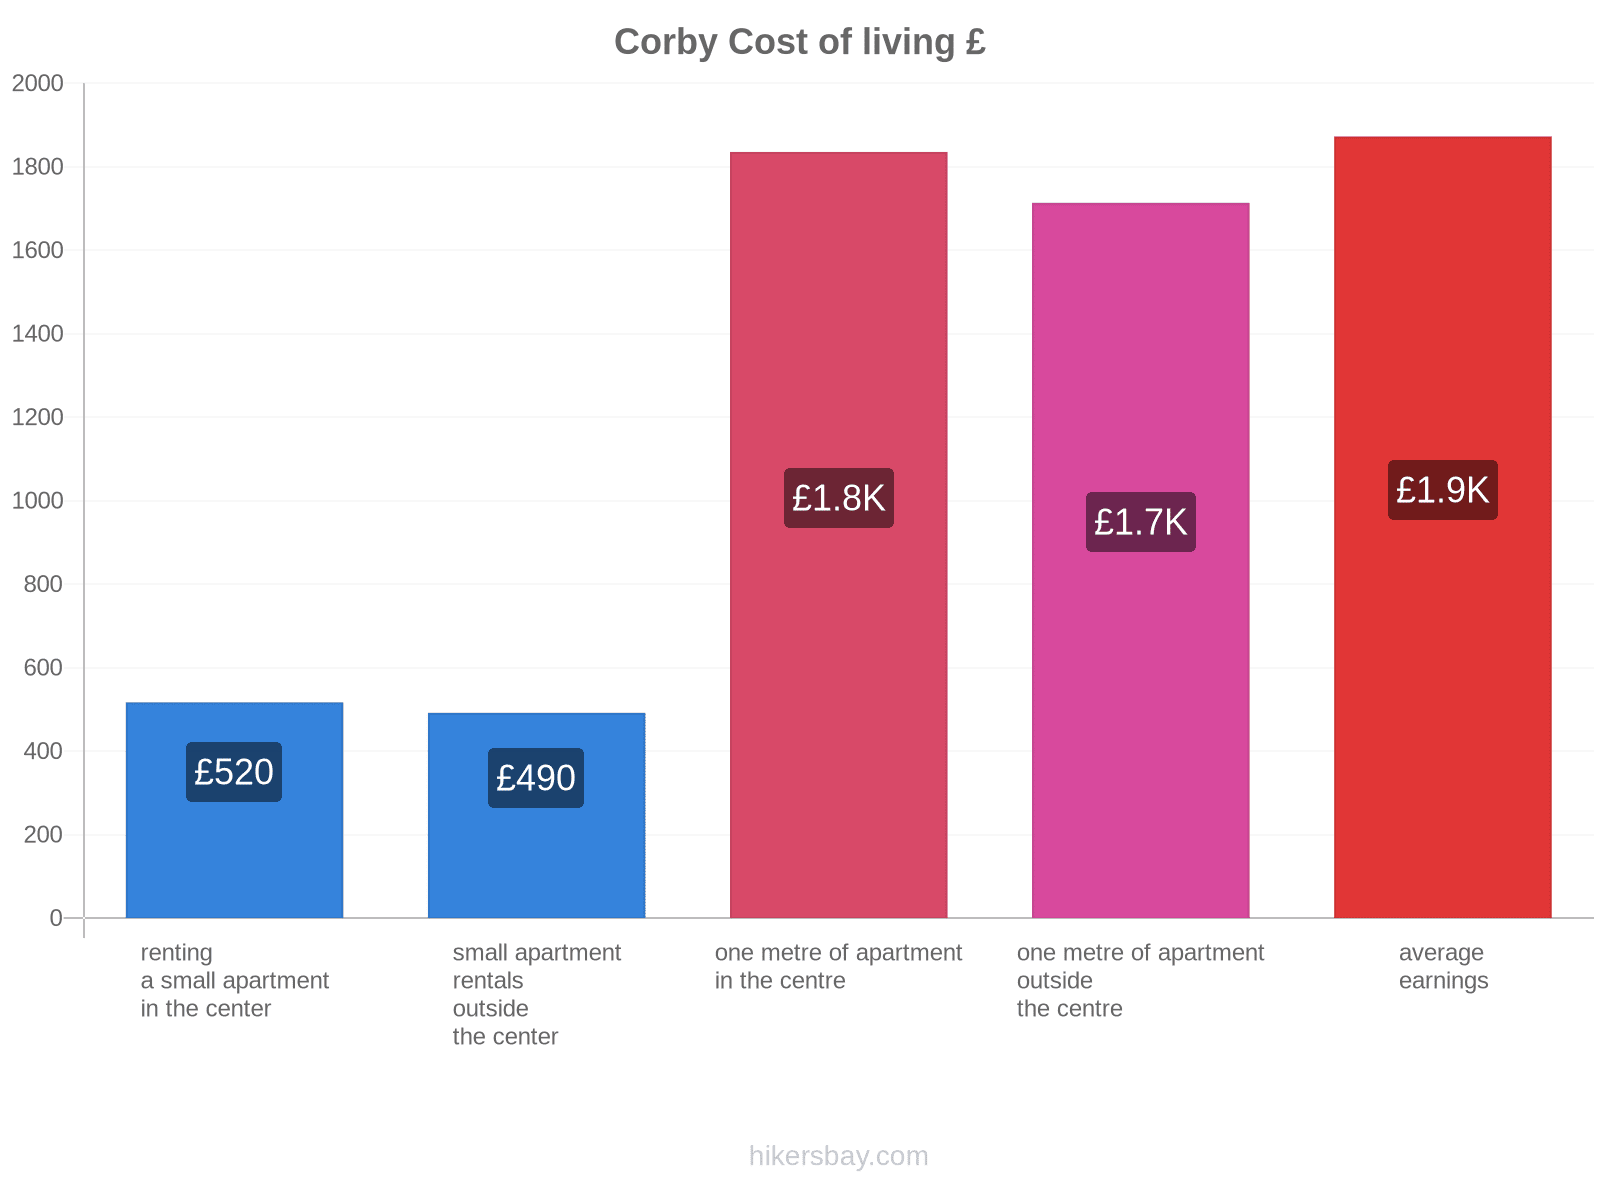 Corby cost of living hikersbay.com